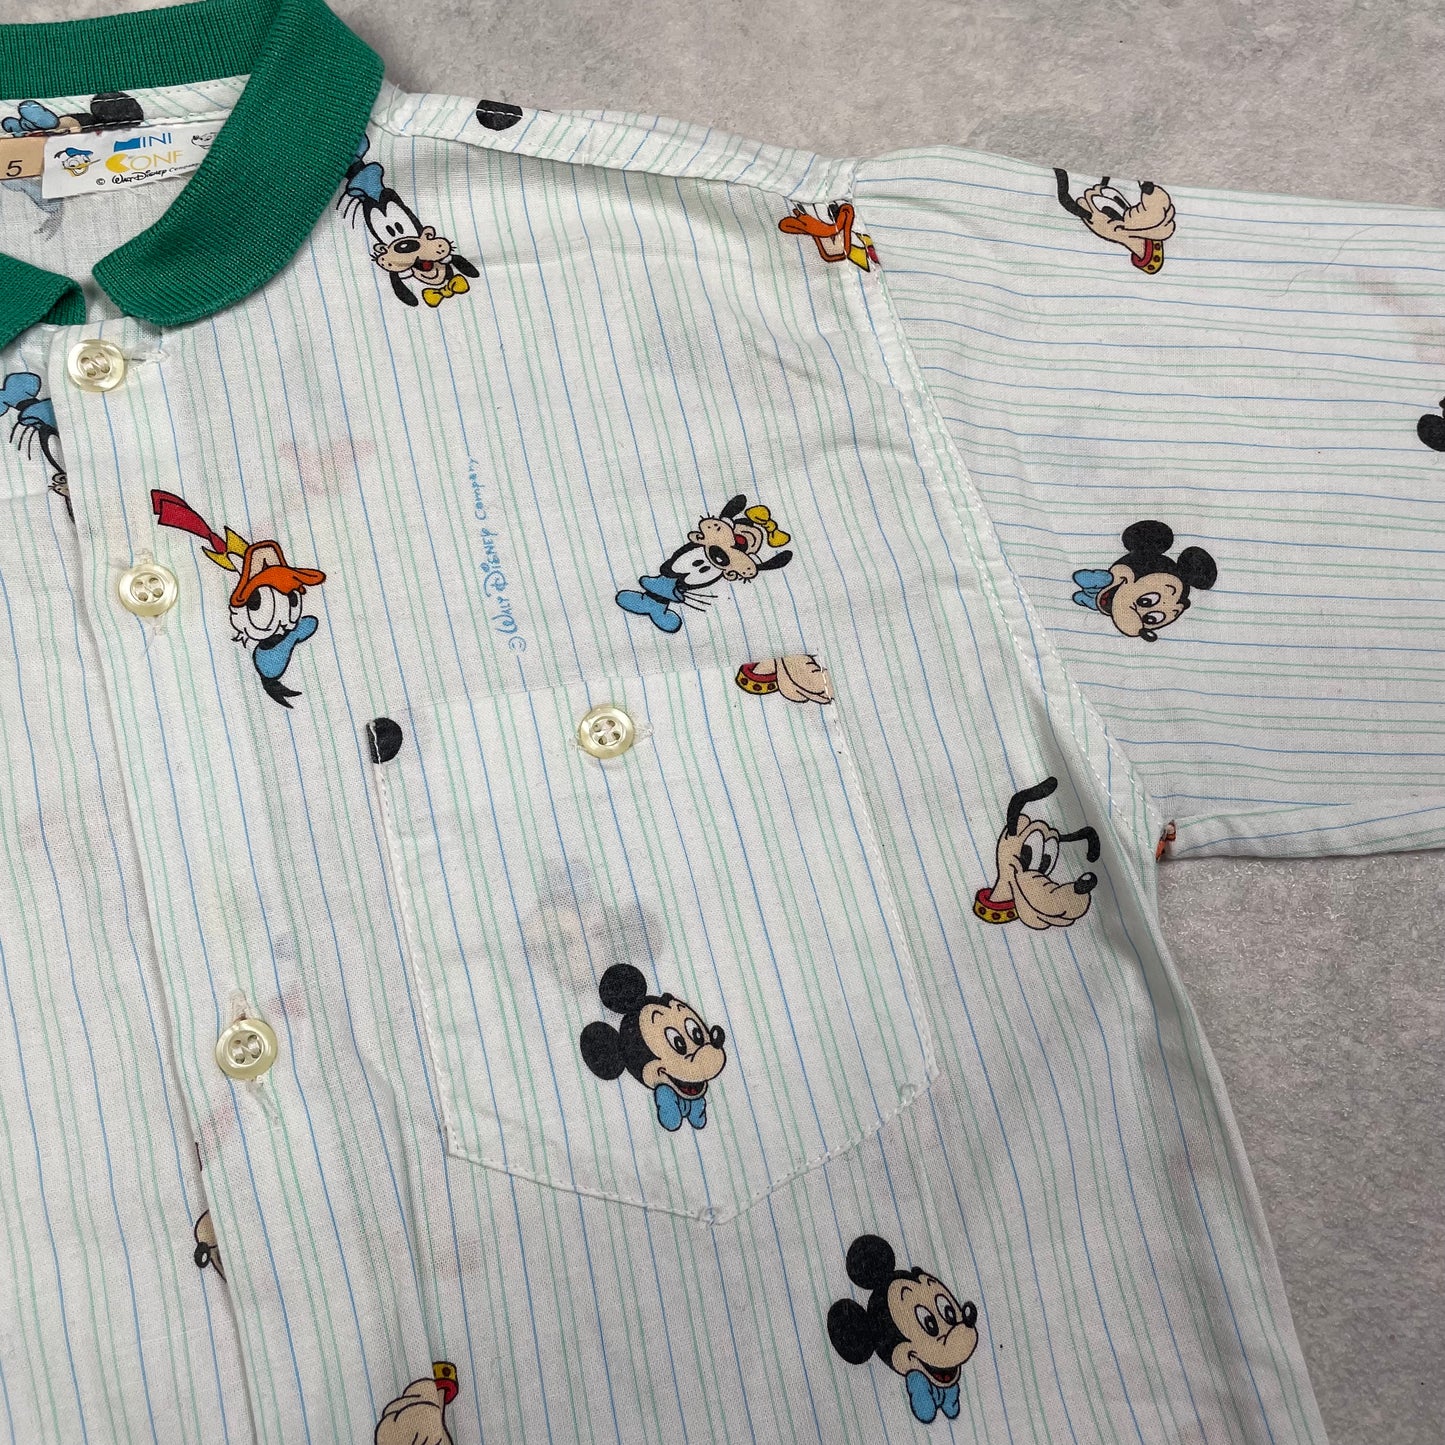 Vintage Disney Mini Cone Kids Button Shirt Size 5